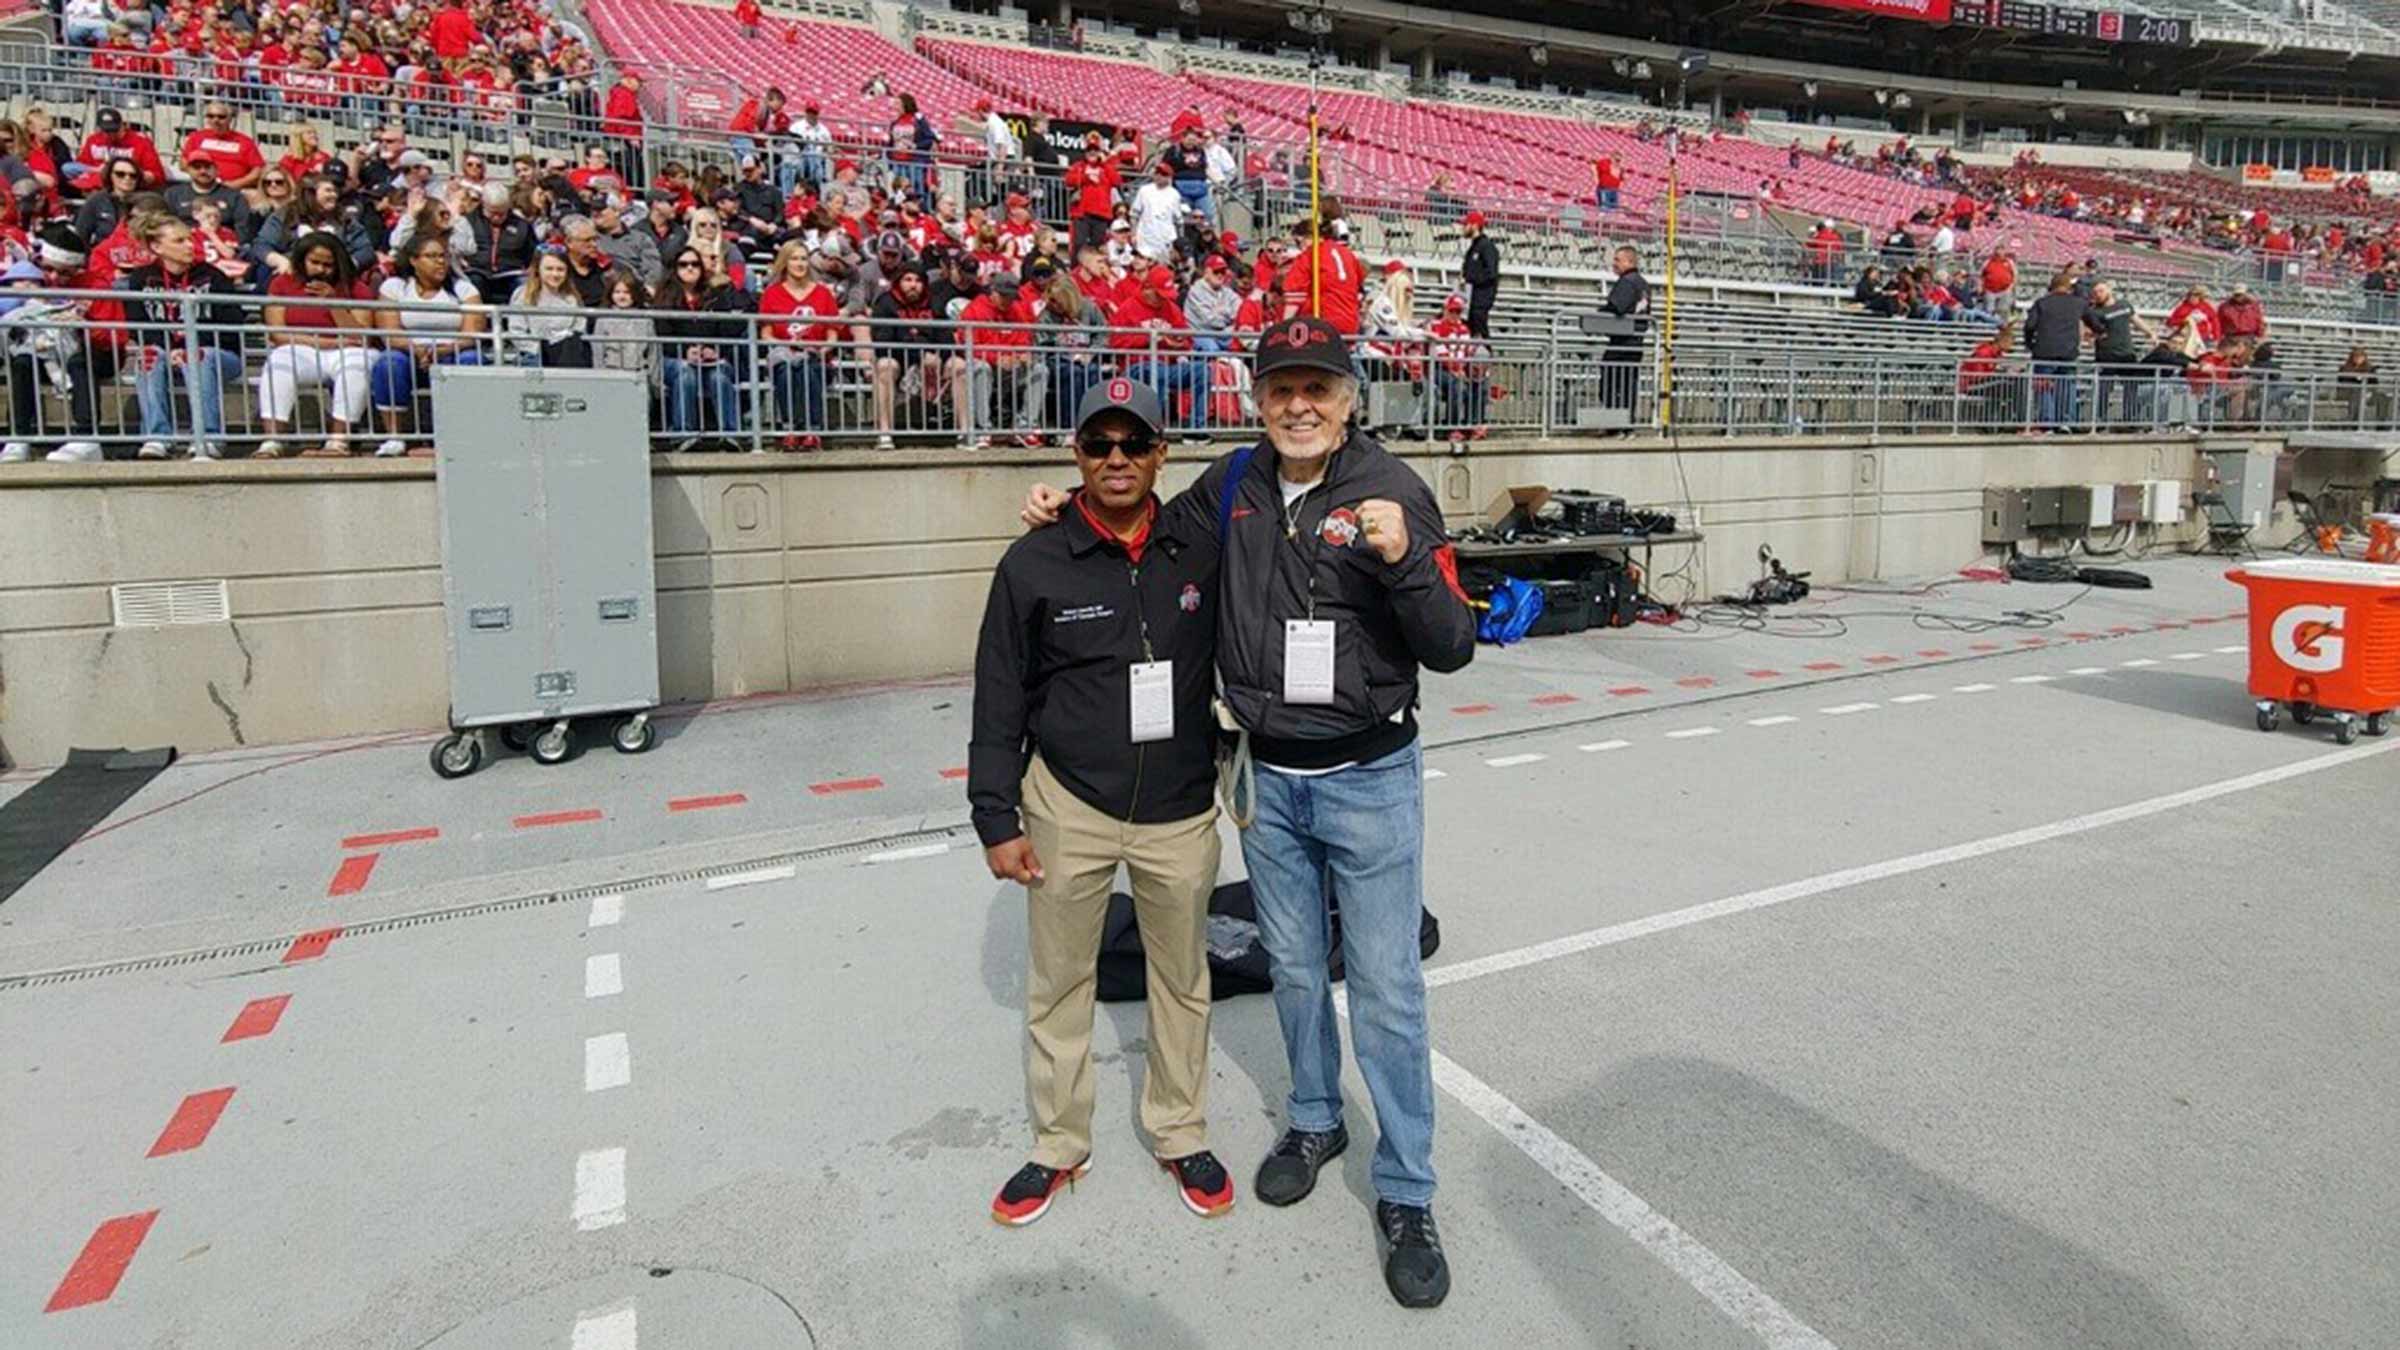 Dr. Merritt with John “Coach” Johnson at the Ohio State stadium